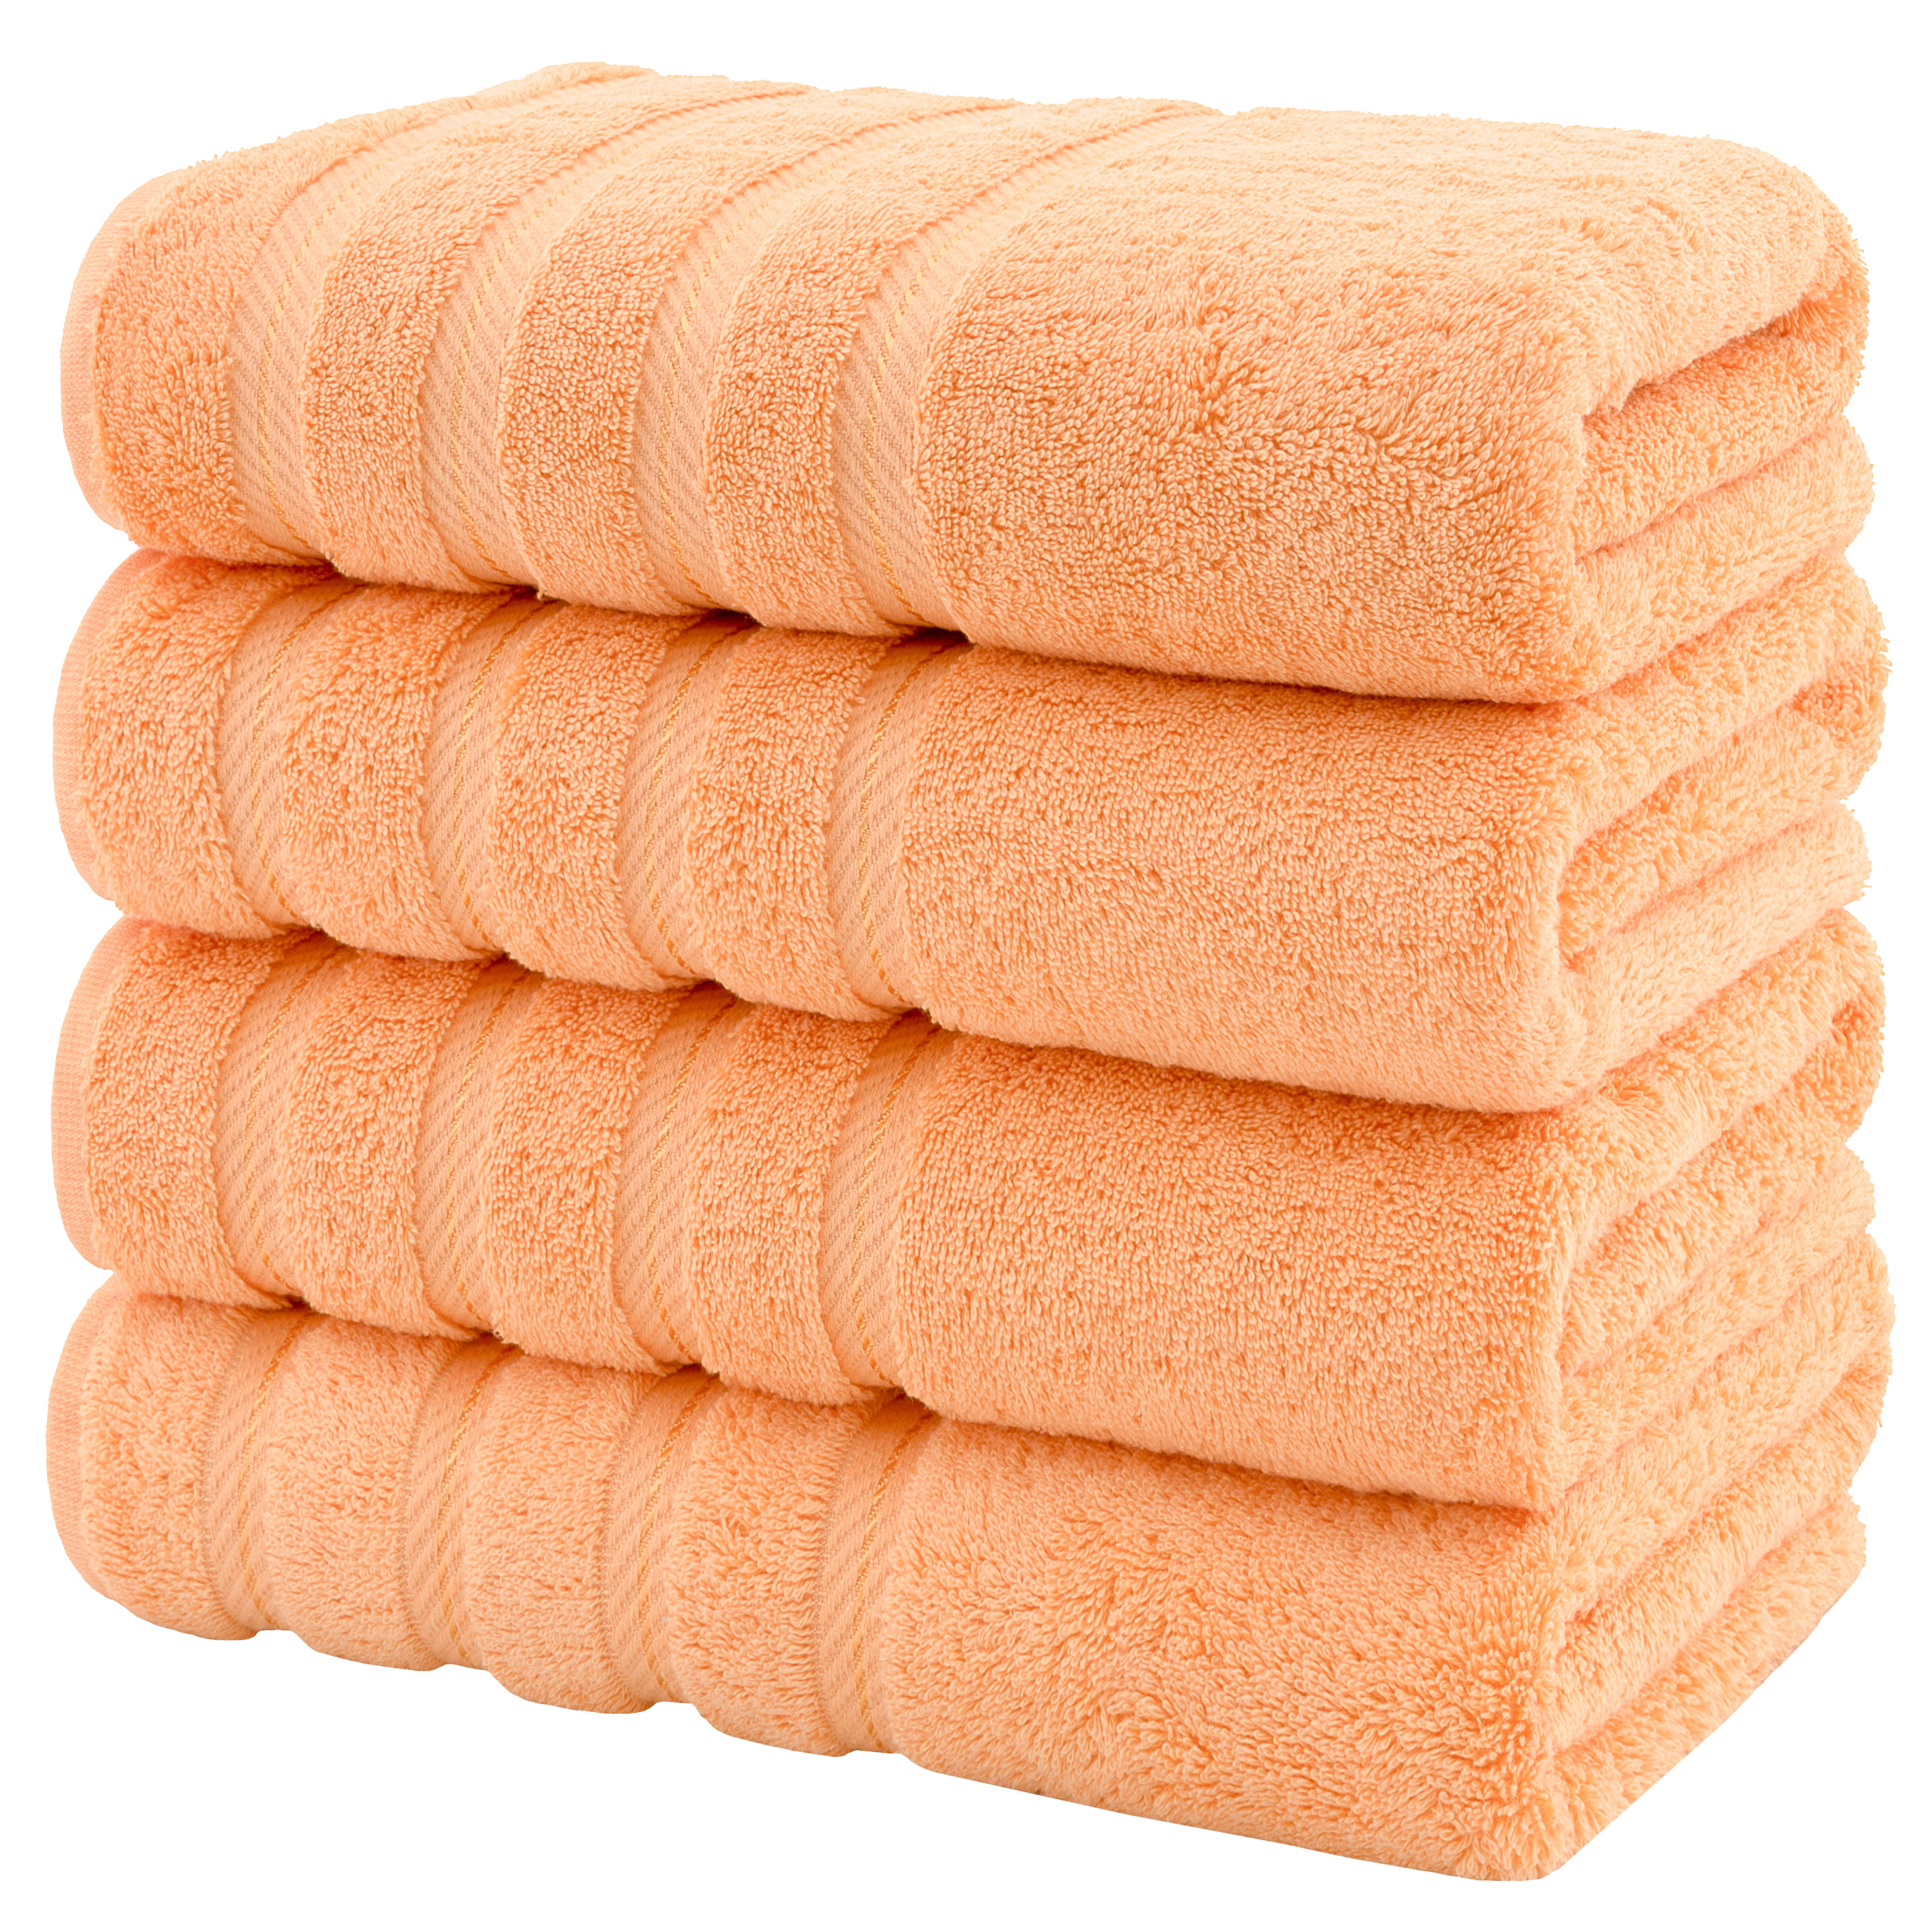 American Soft Linen Bath Towel Set 100% Turkish Cotton 3 Piece Towels for  Bathroom- Sage Green Edis3PcSageE56 - The Home Depot